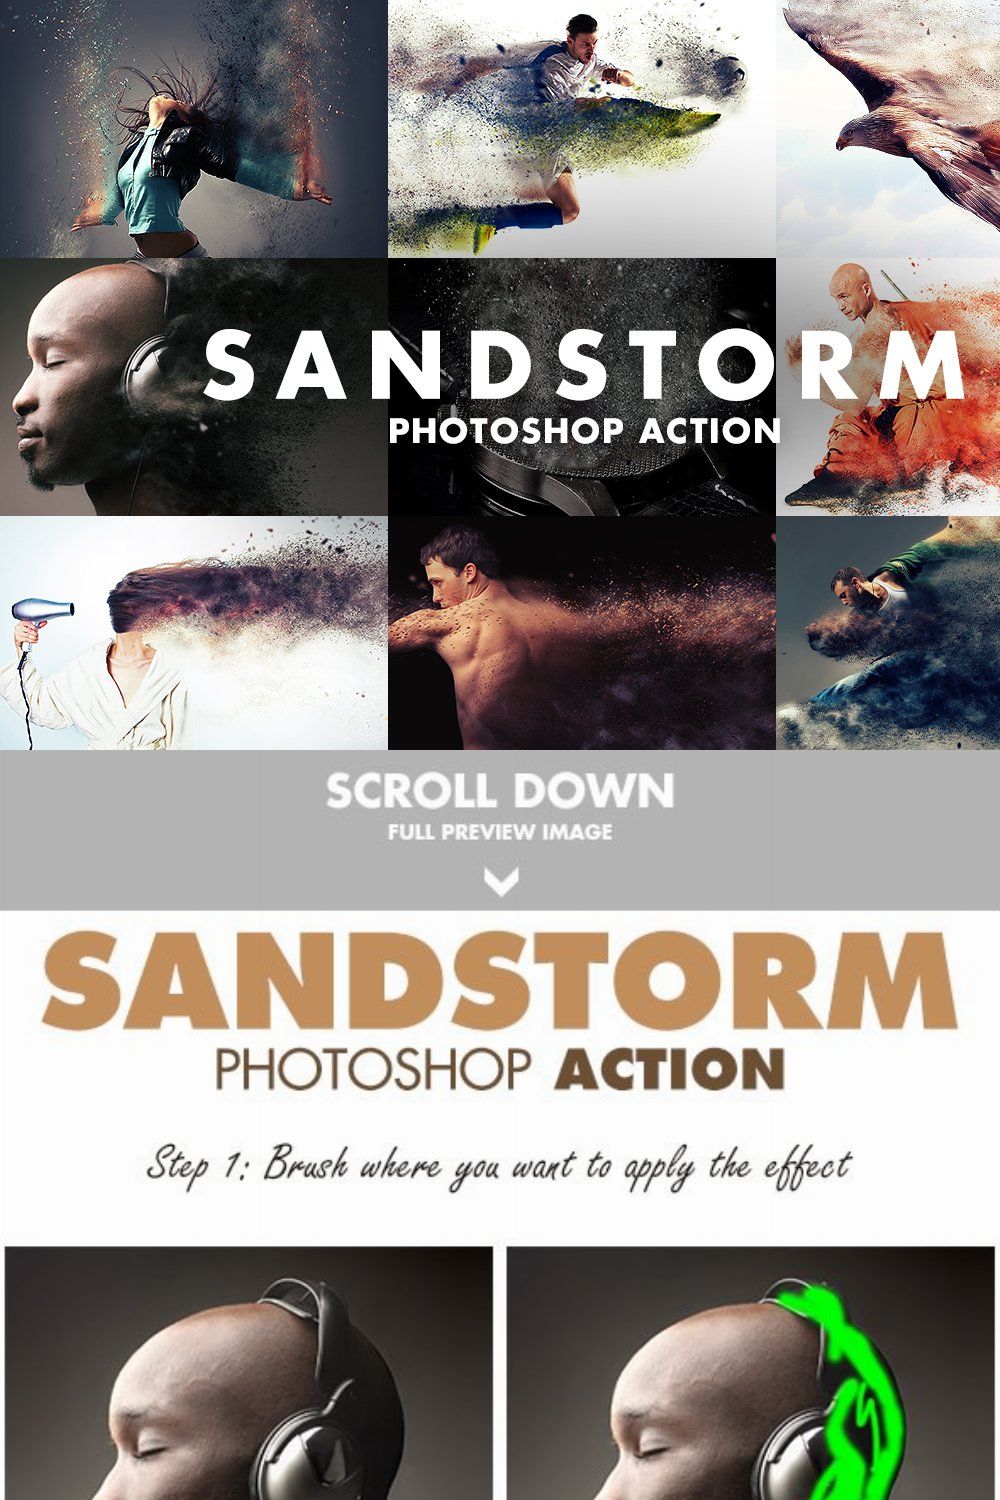 Sandstorm Photoshop Action pinterest preview image.